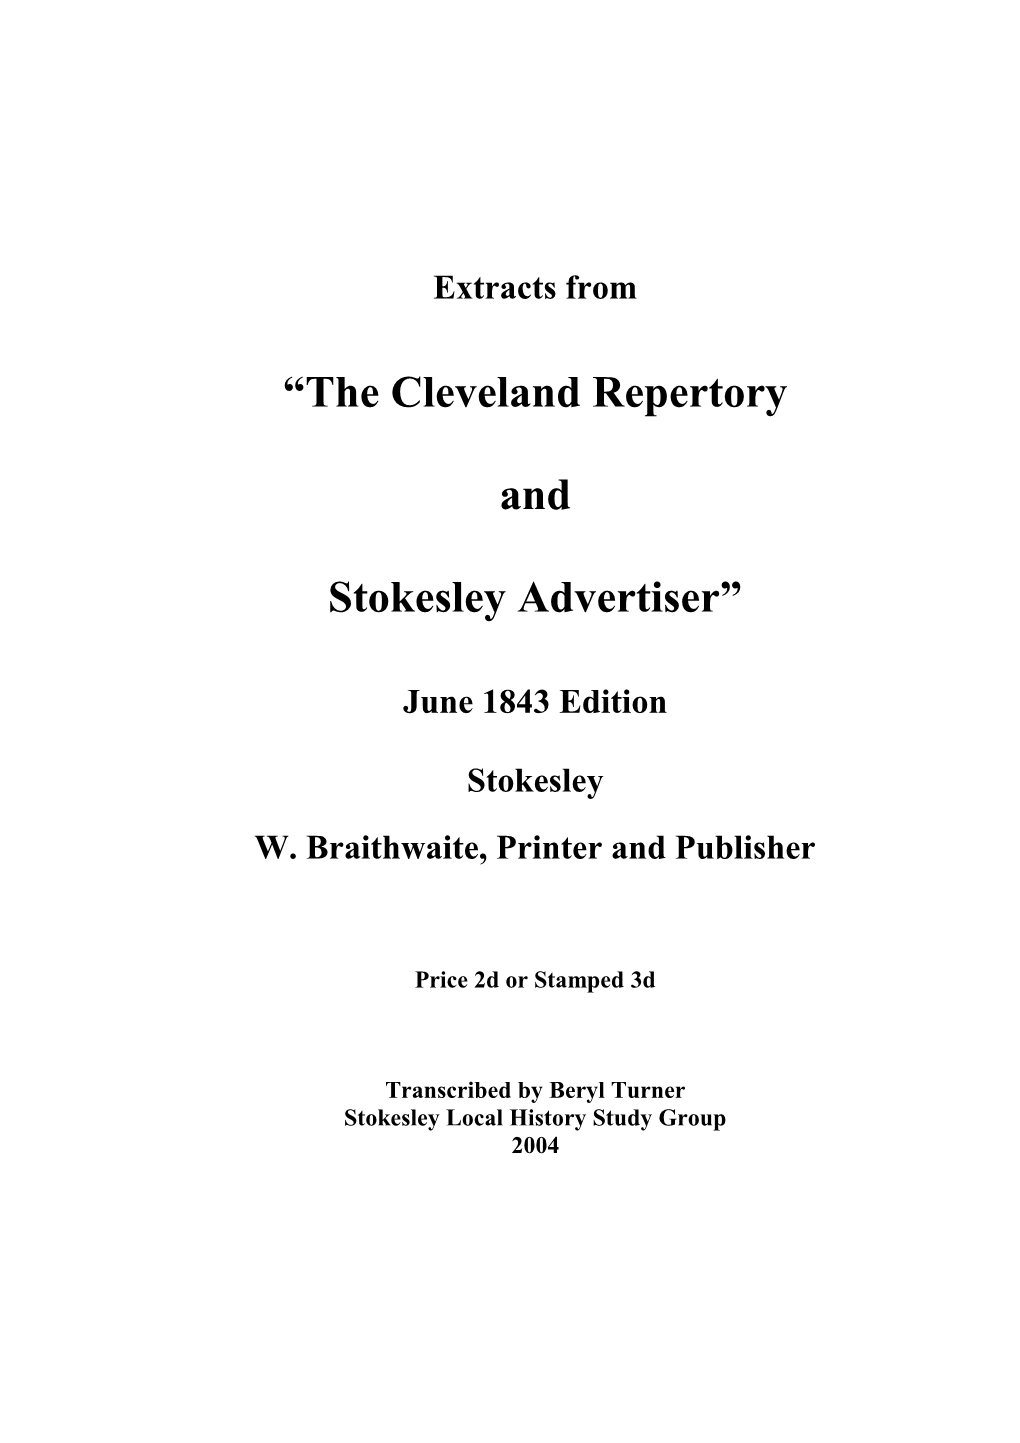 Cleveland Repertory & Stokesley Advertiser Jun 1843